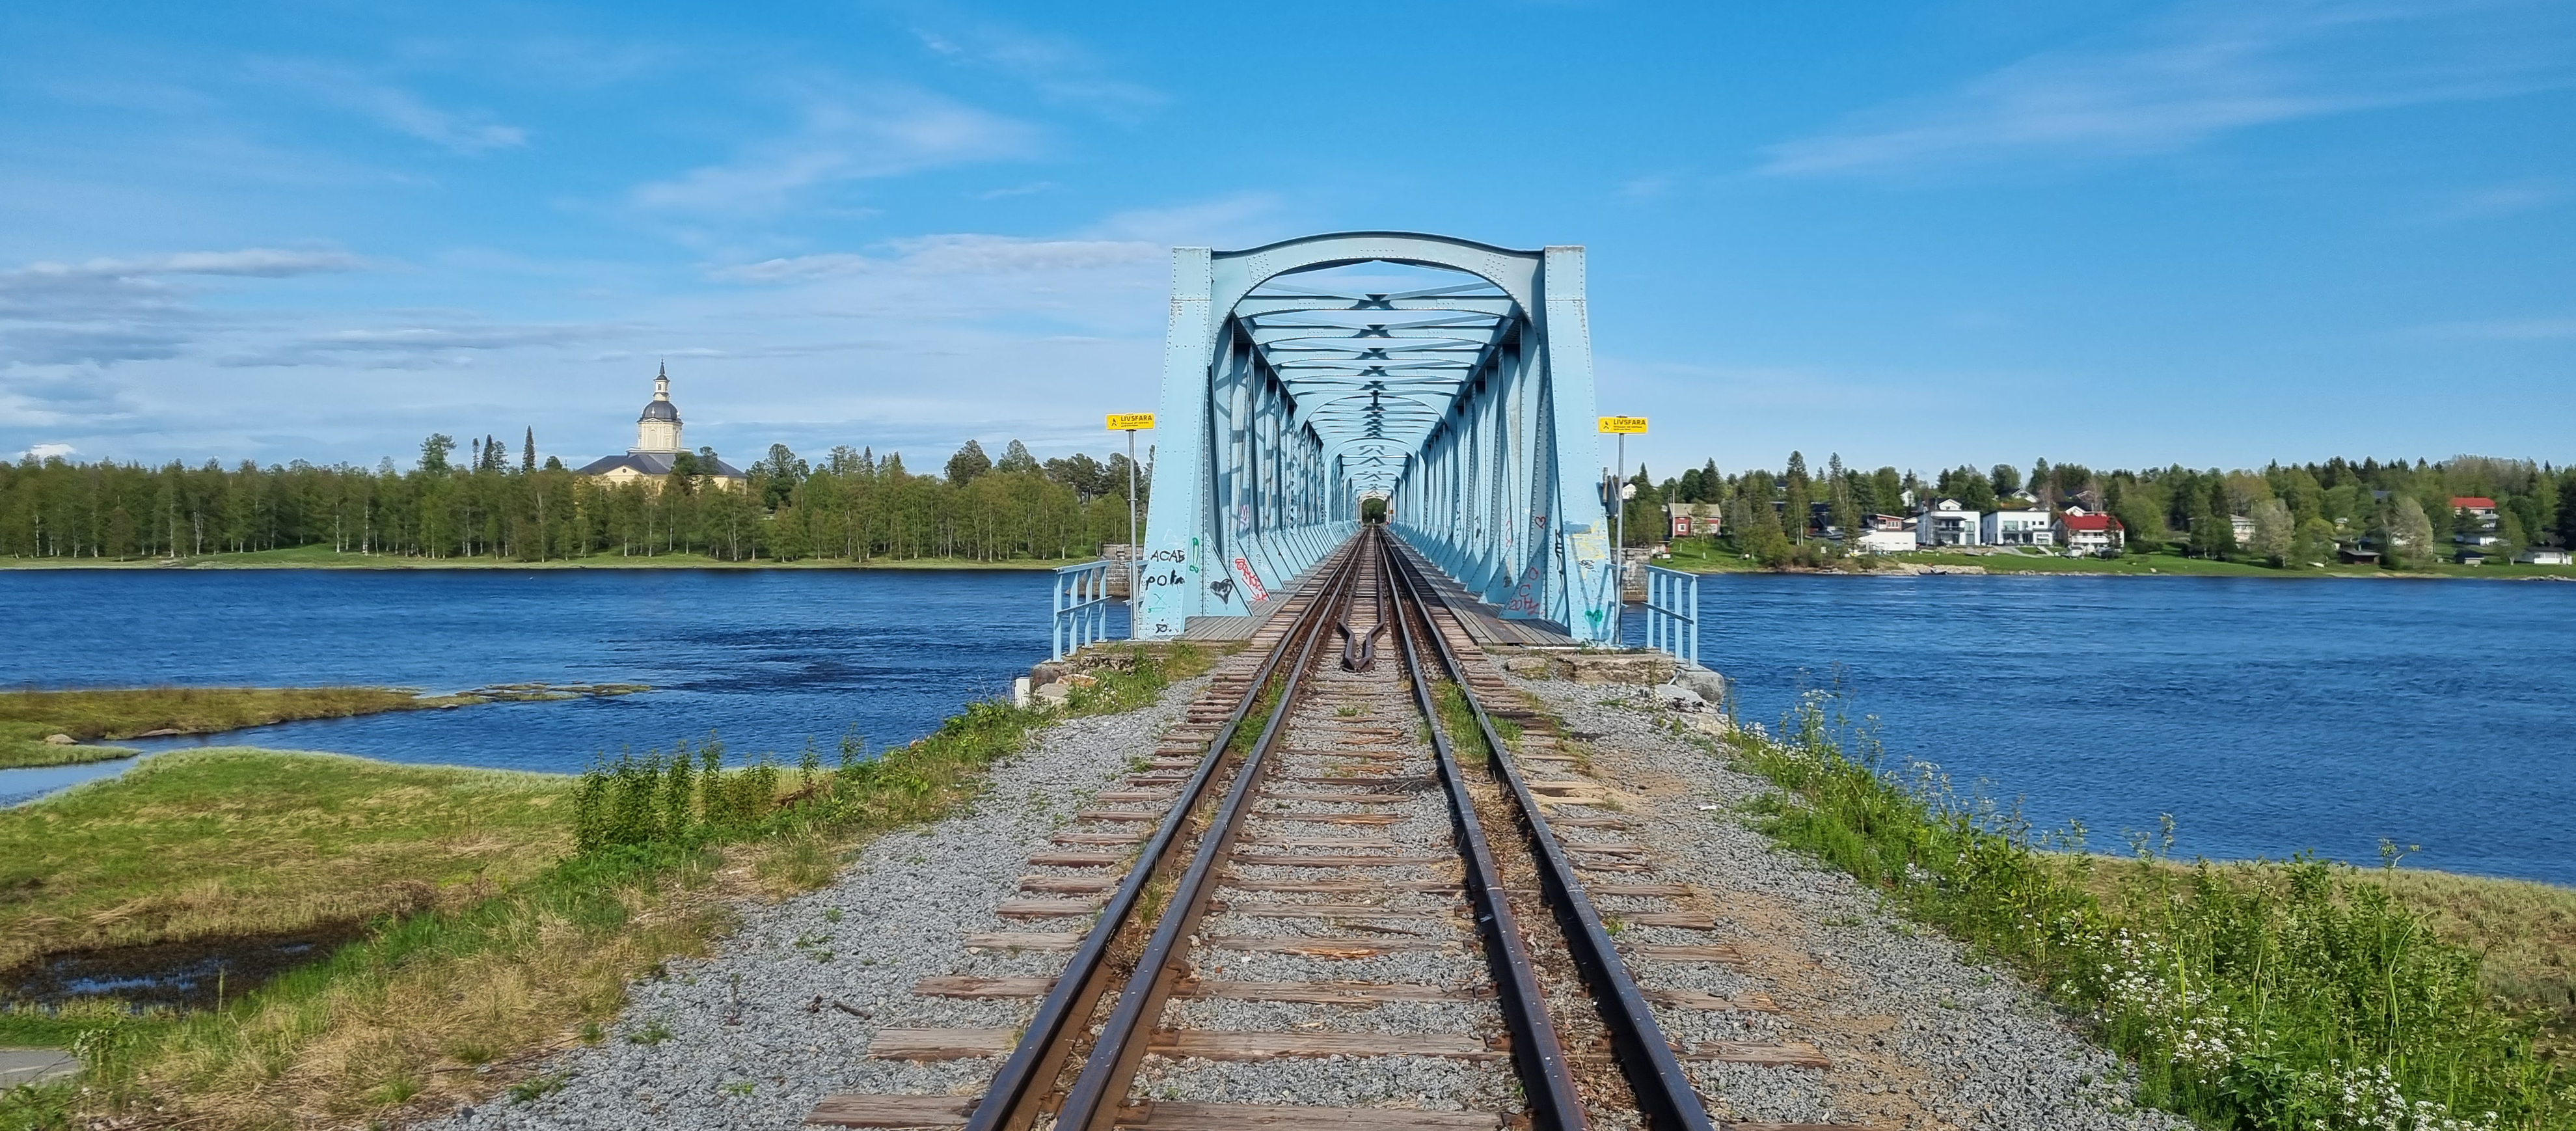 Torneo River railway bridge